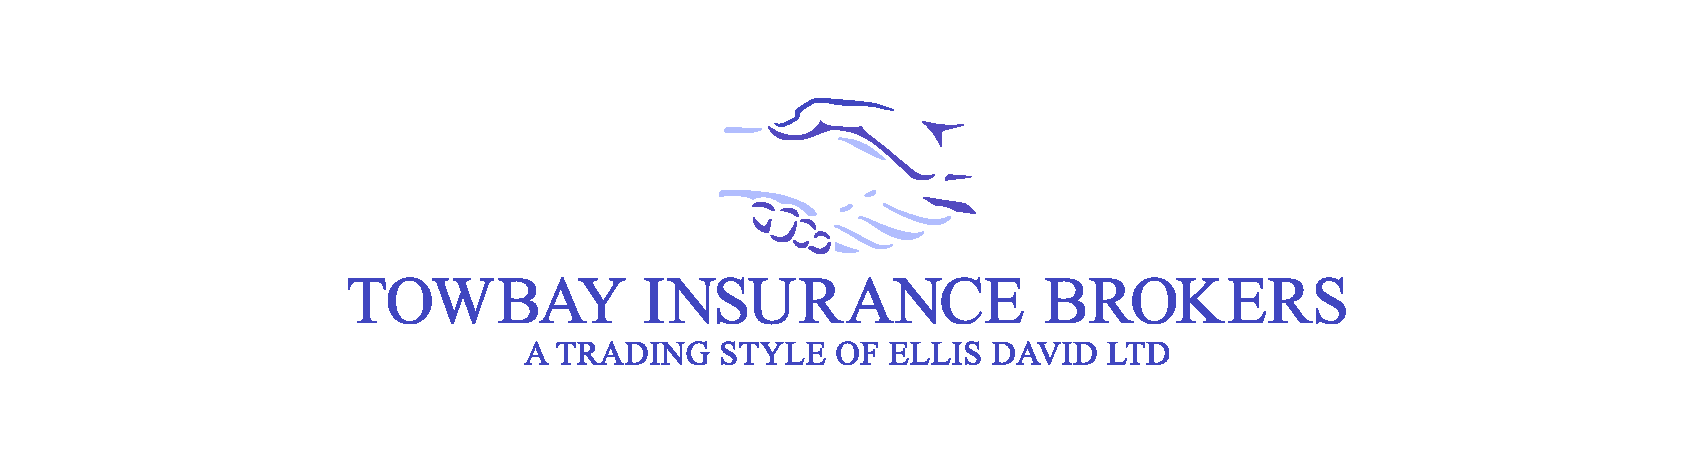 Towbay insurance brokers logo